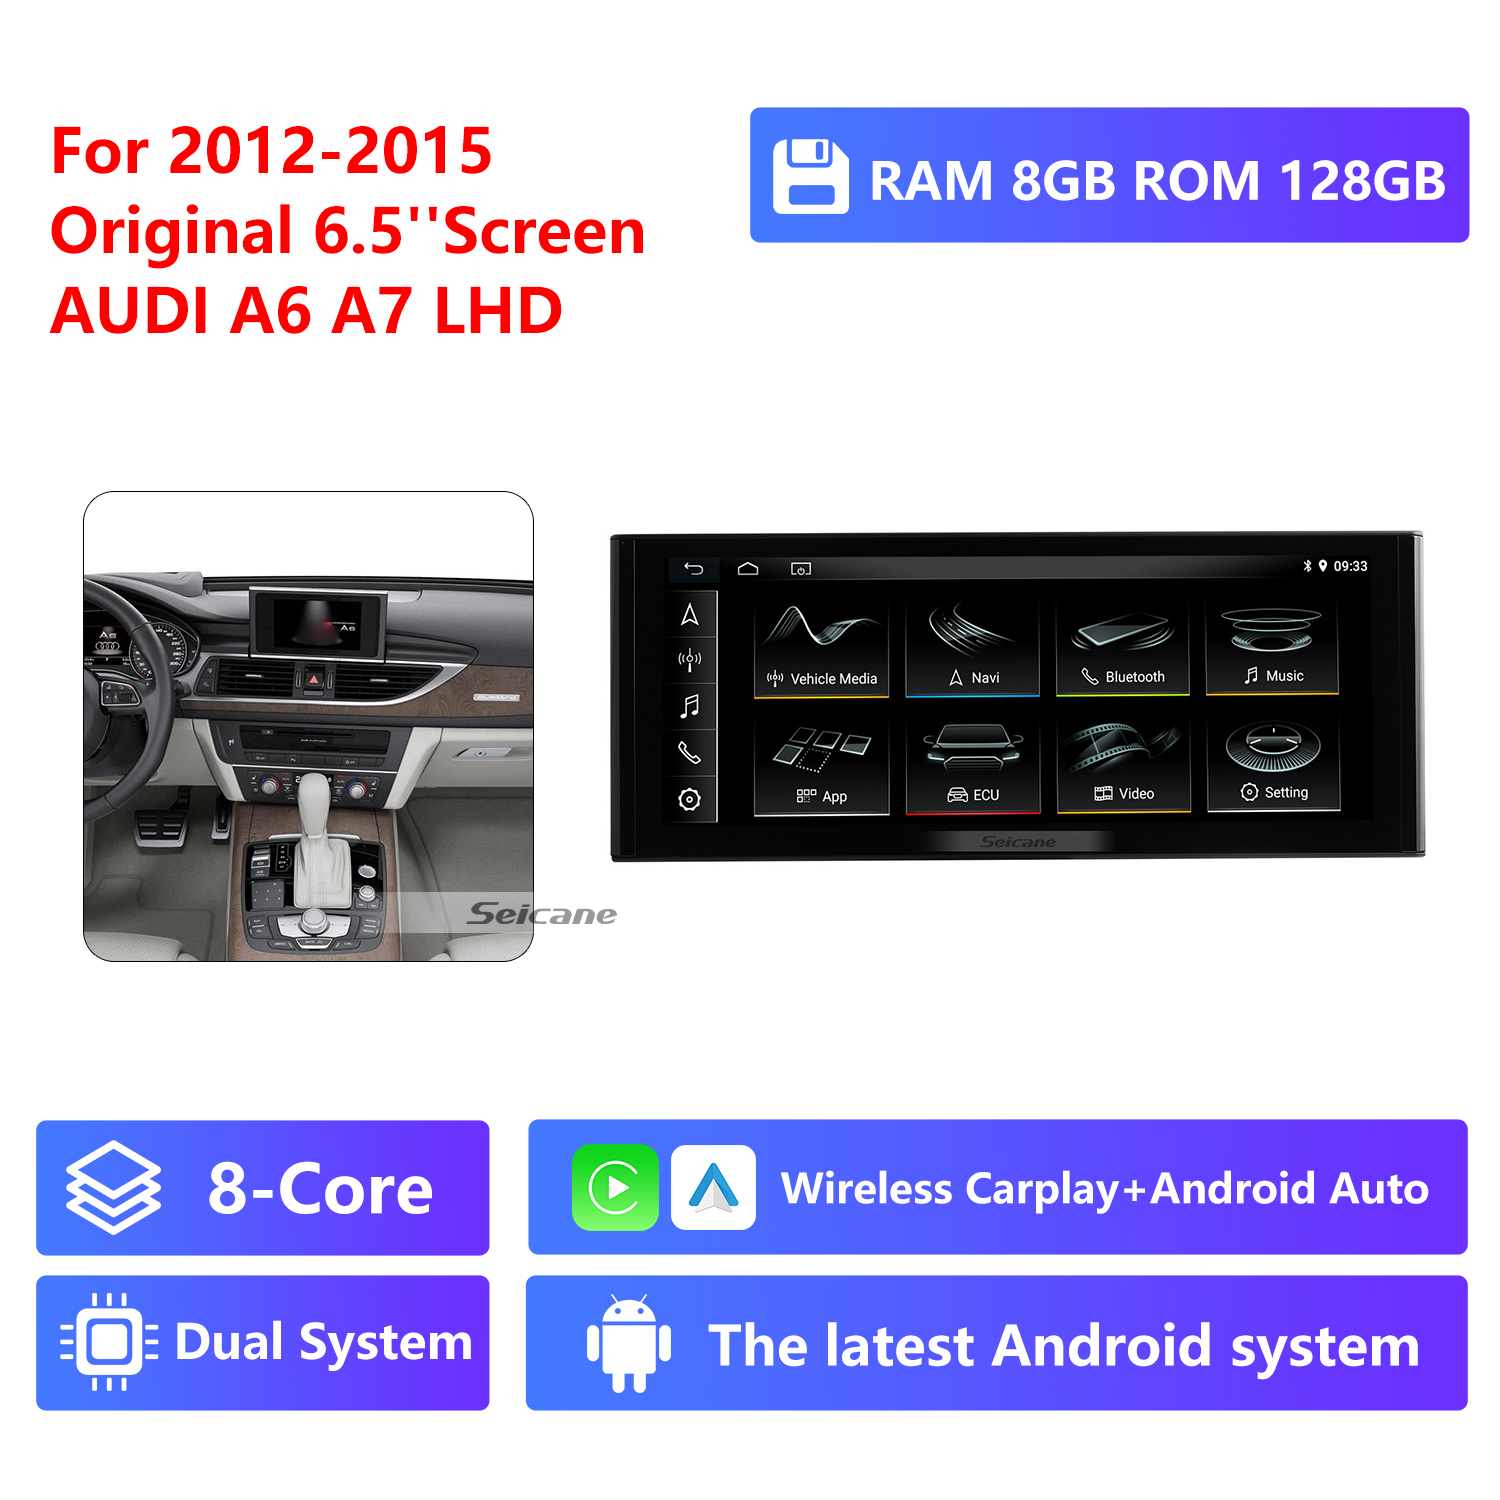 8-Core RAM 8G ROM 128G,2012-2015, Original 6.5"Screen,LHD